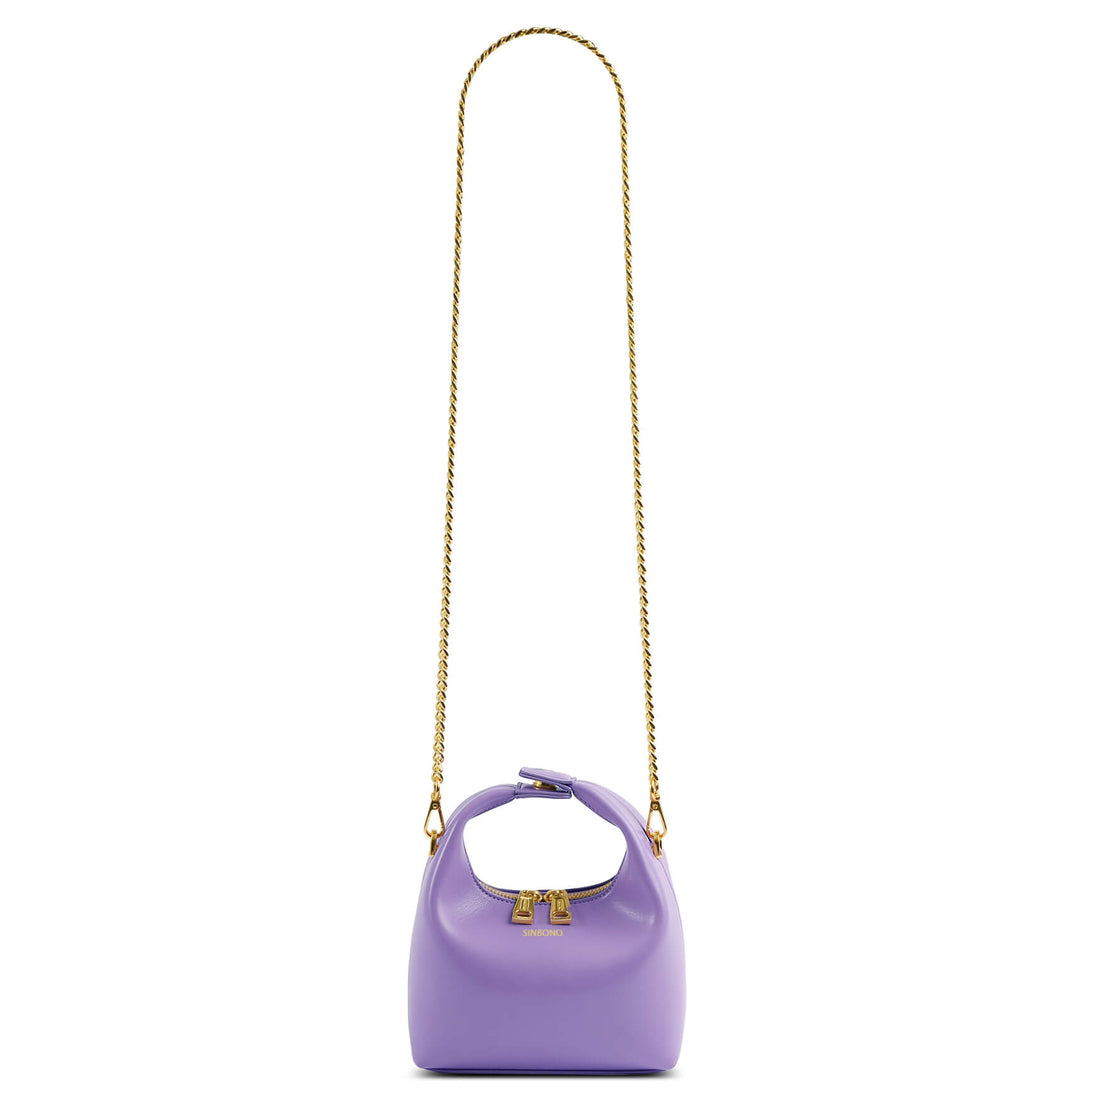  SINBONO Small Top Handbags for Women, Soft Vegan